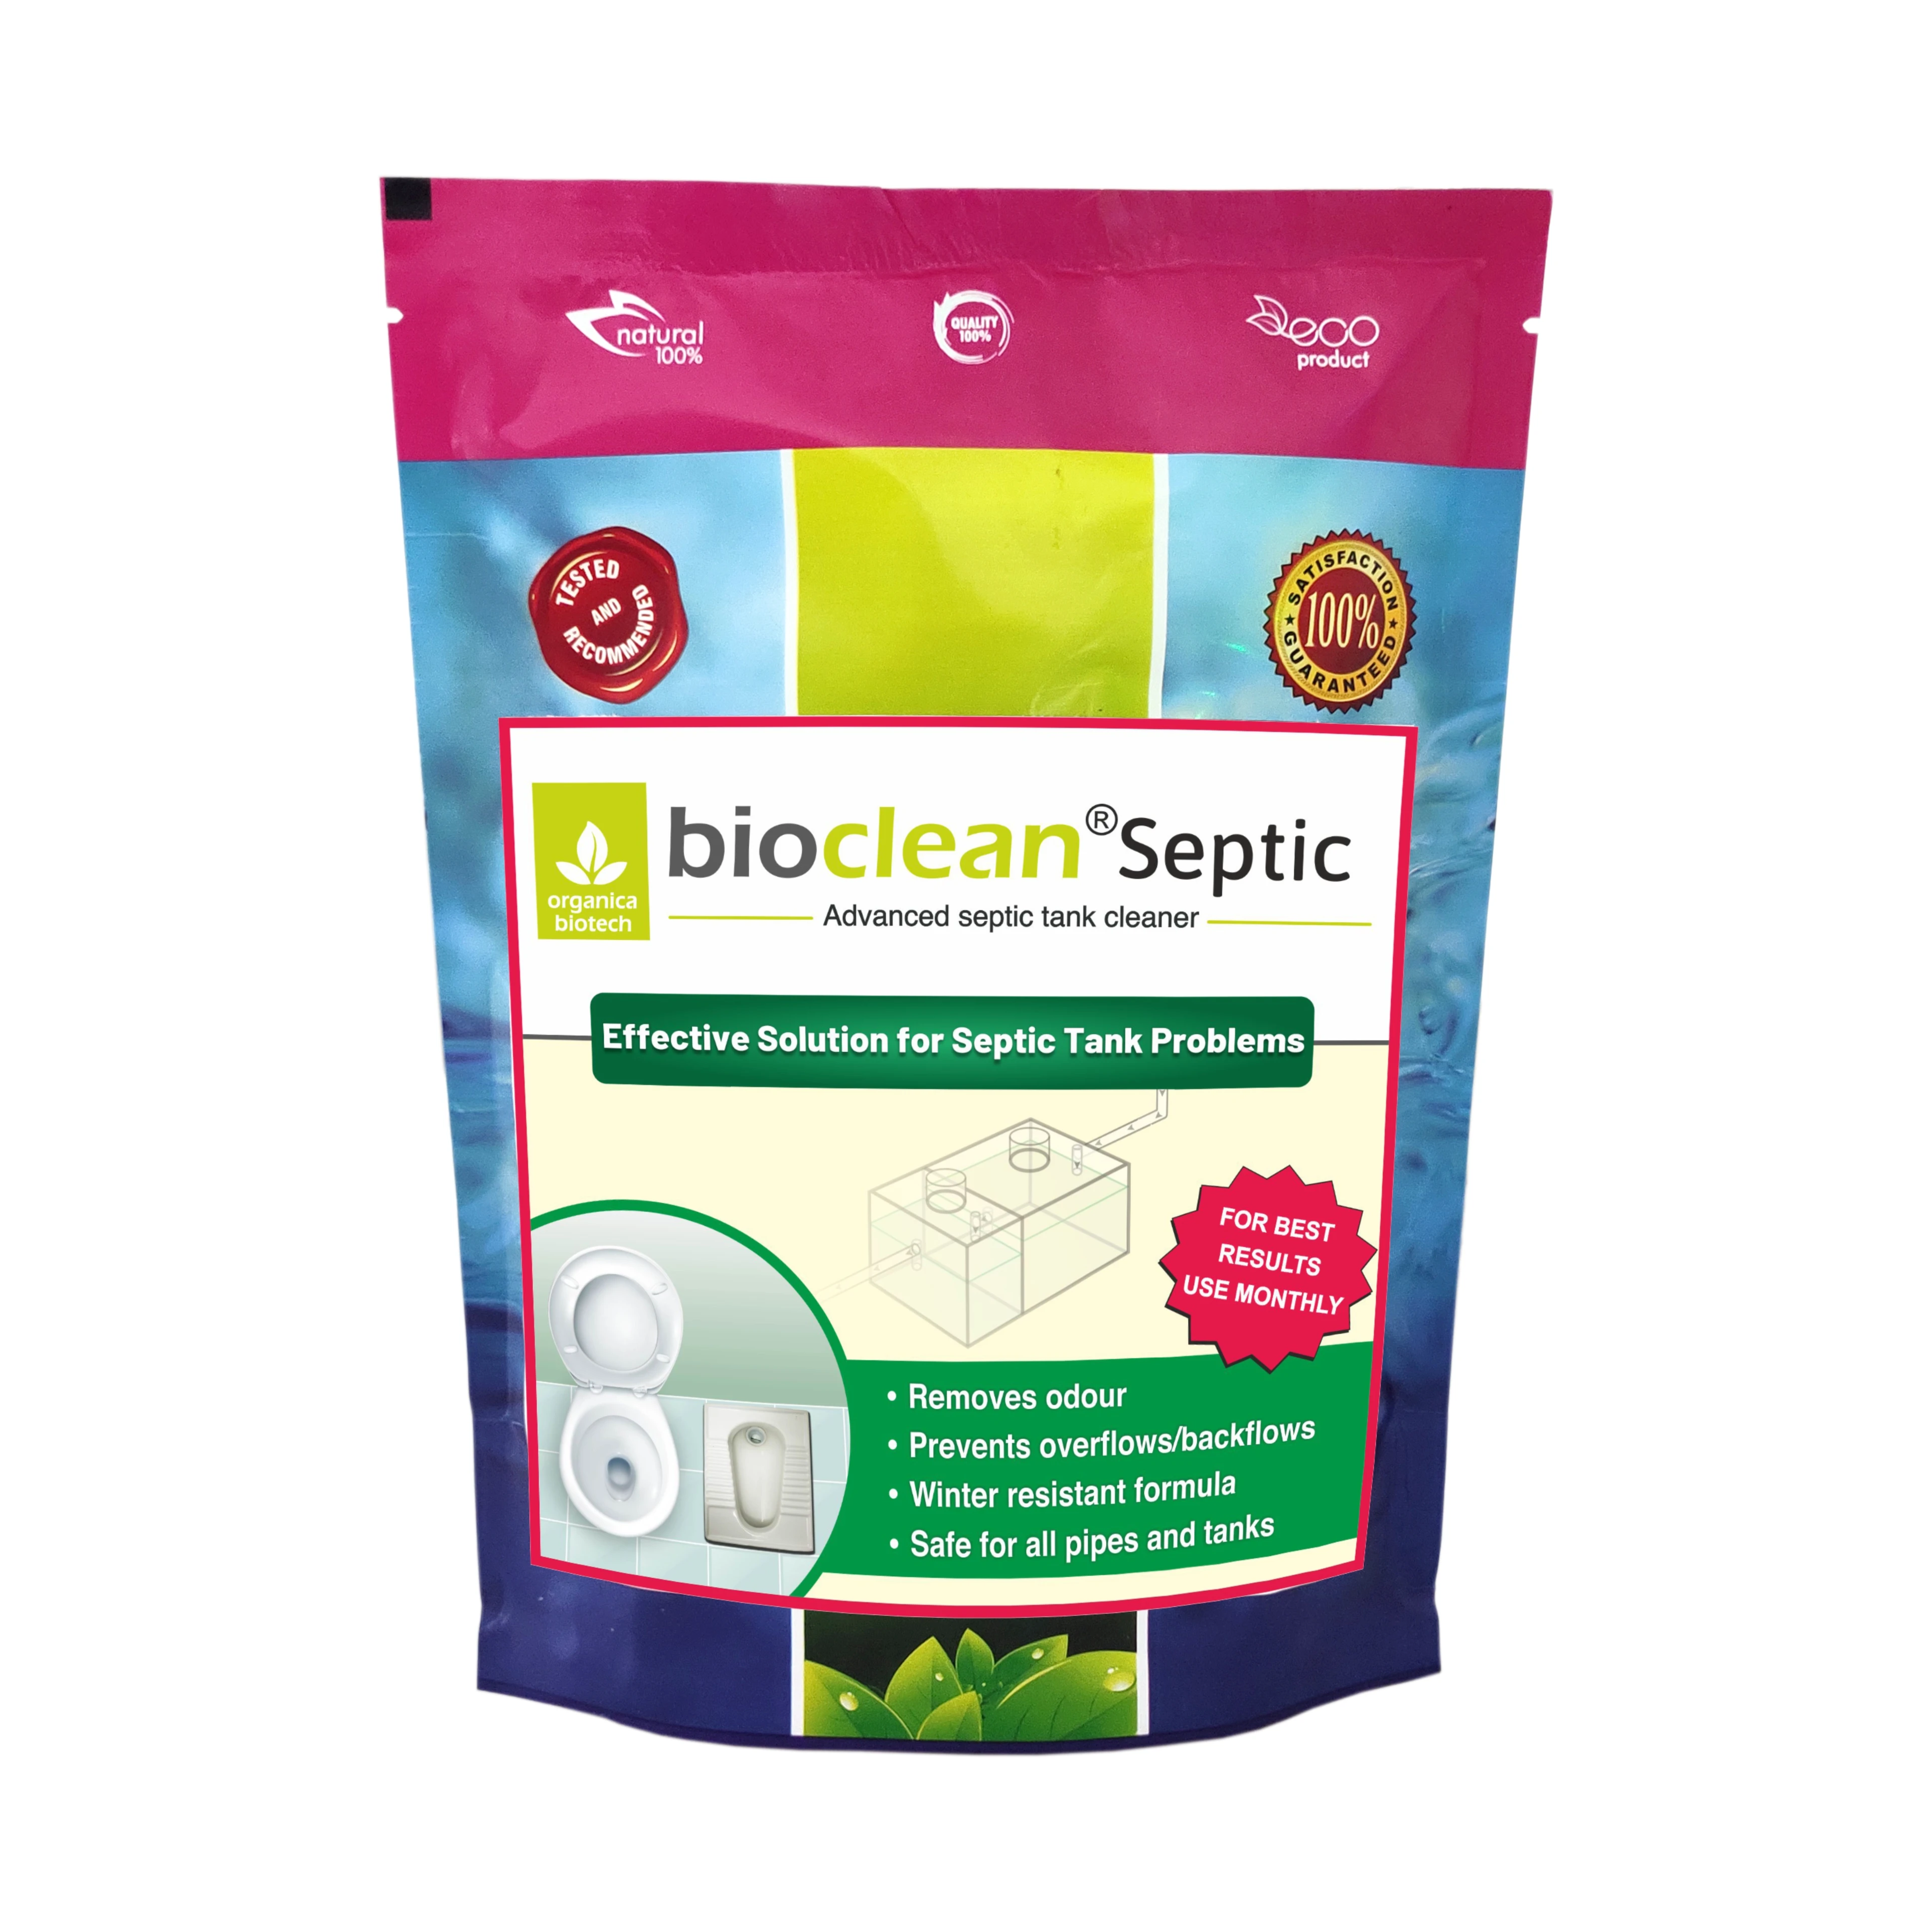 BioClean shop Saudi Arabia  Buy BioClean products online Saudi